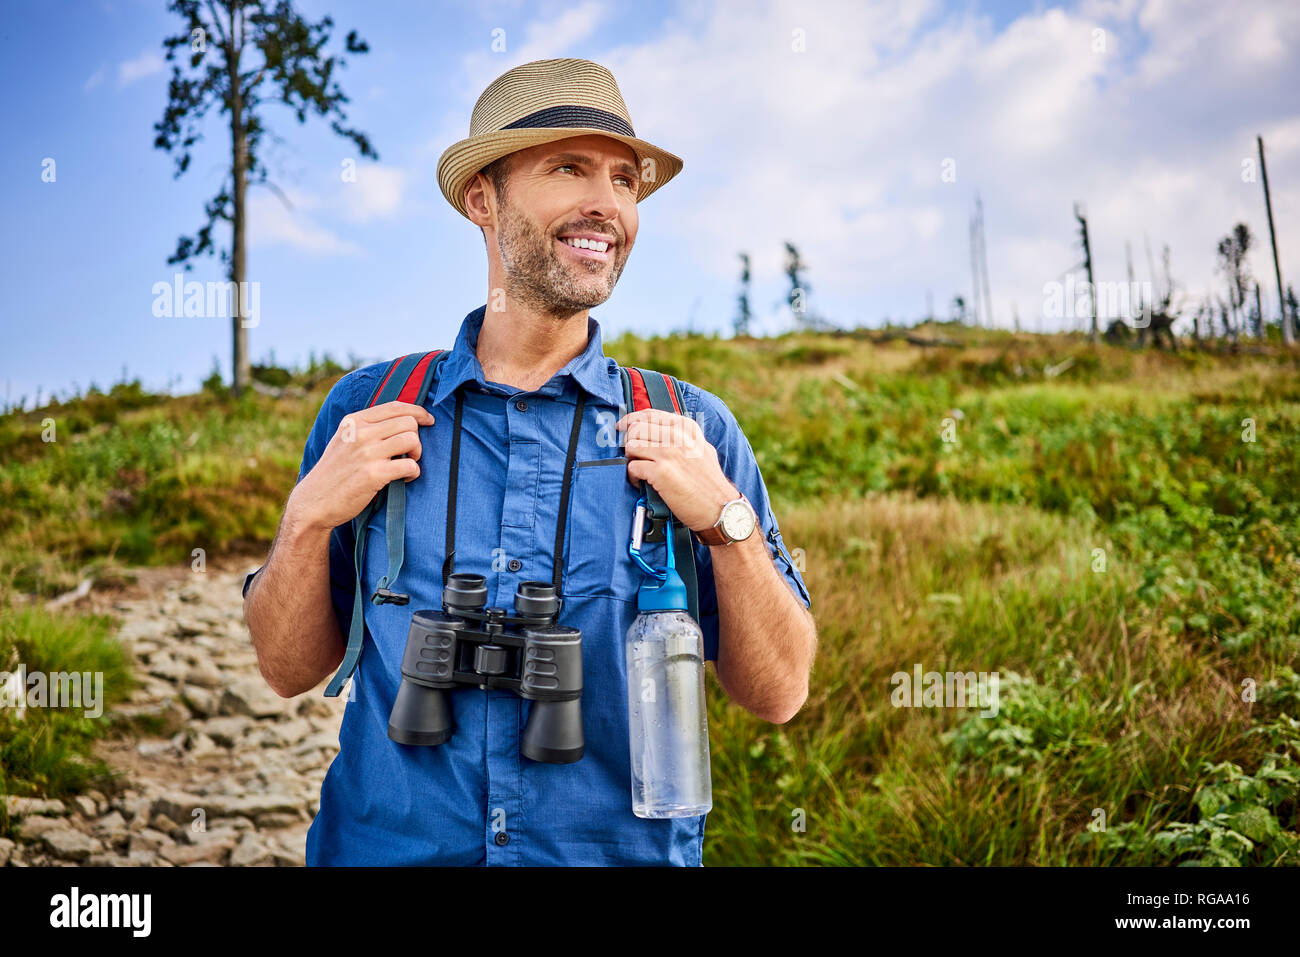 Smiling man with binoculars randonnée en montagne Banque D'Images